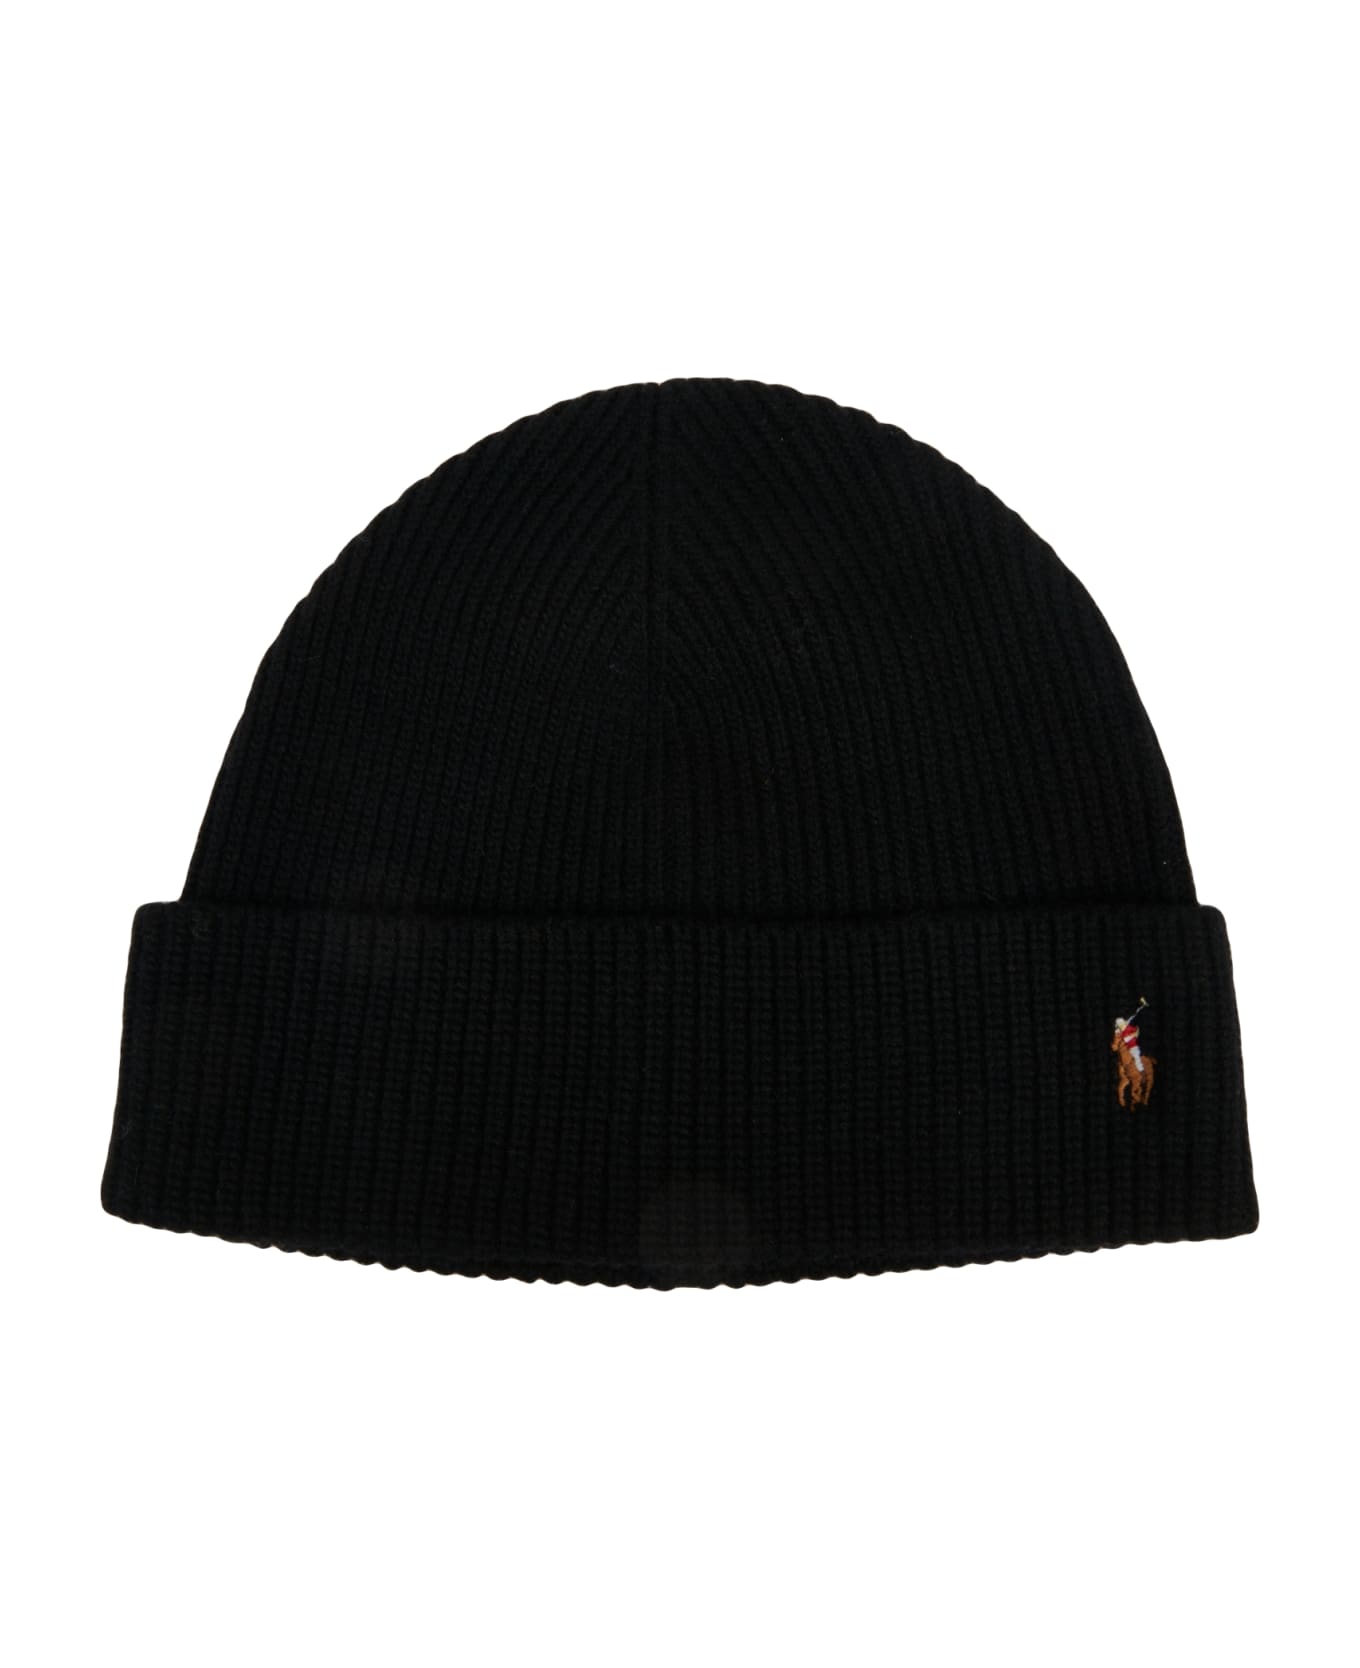 Polo Ralph Lauren Cuff Hat - Black